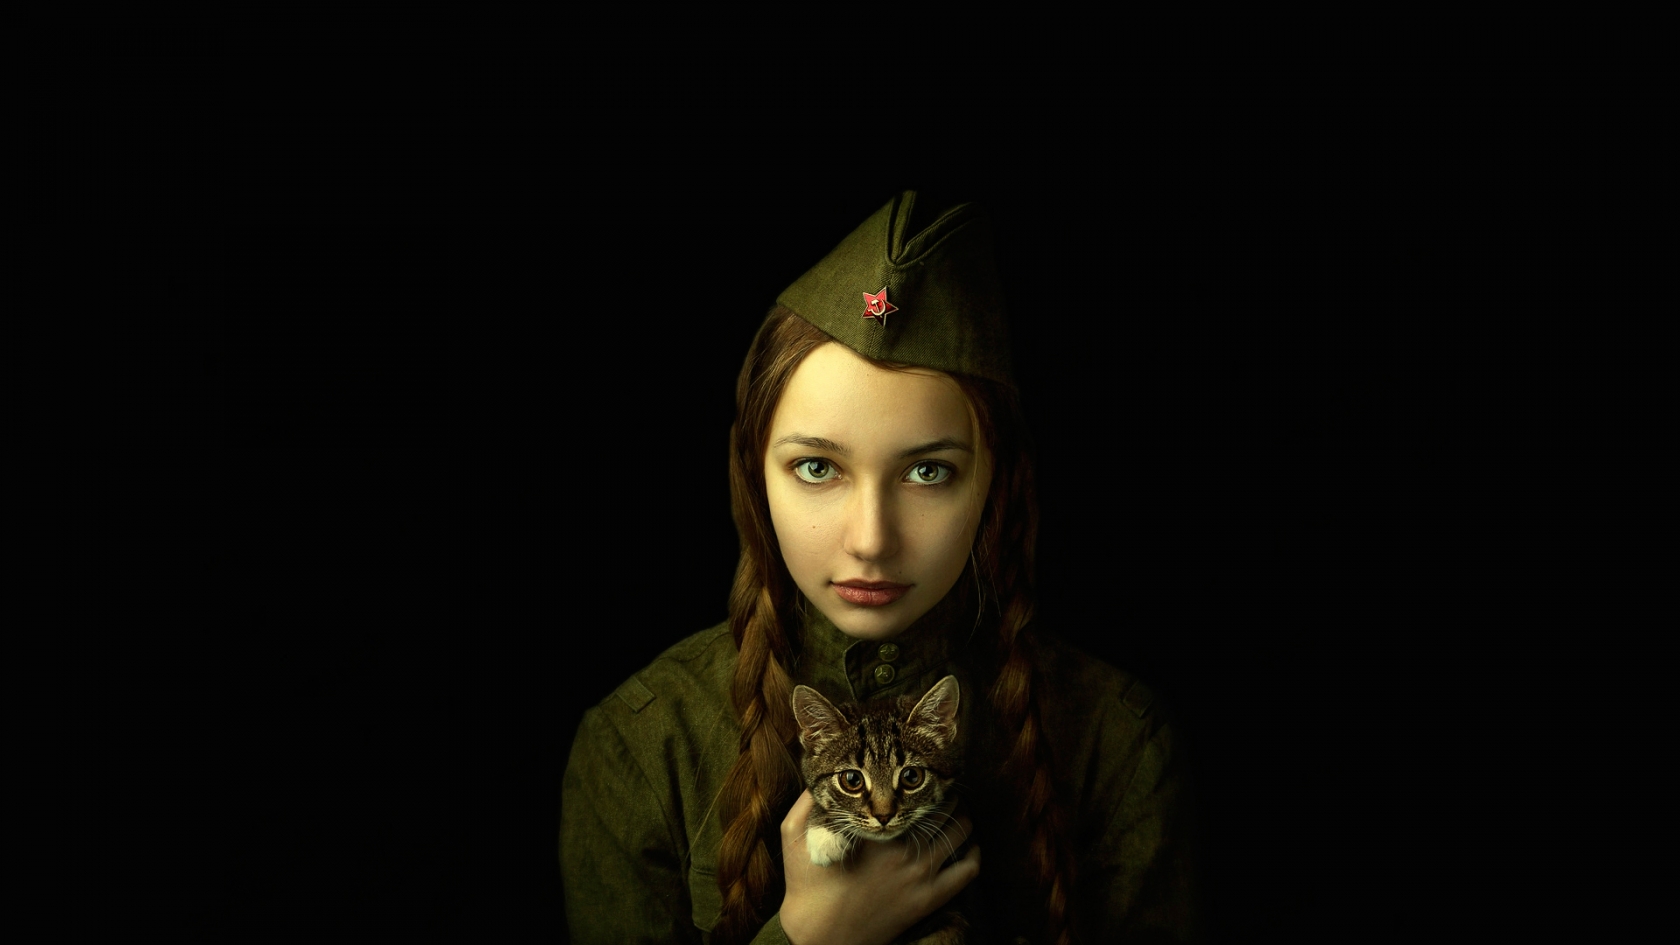 Soldier Girl Portrait for 1680 x 945 HDTV resolution